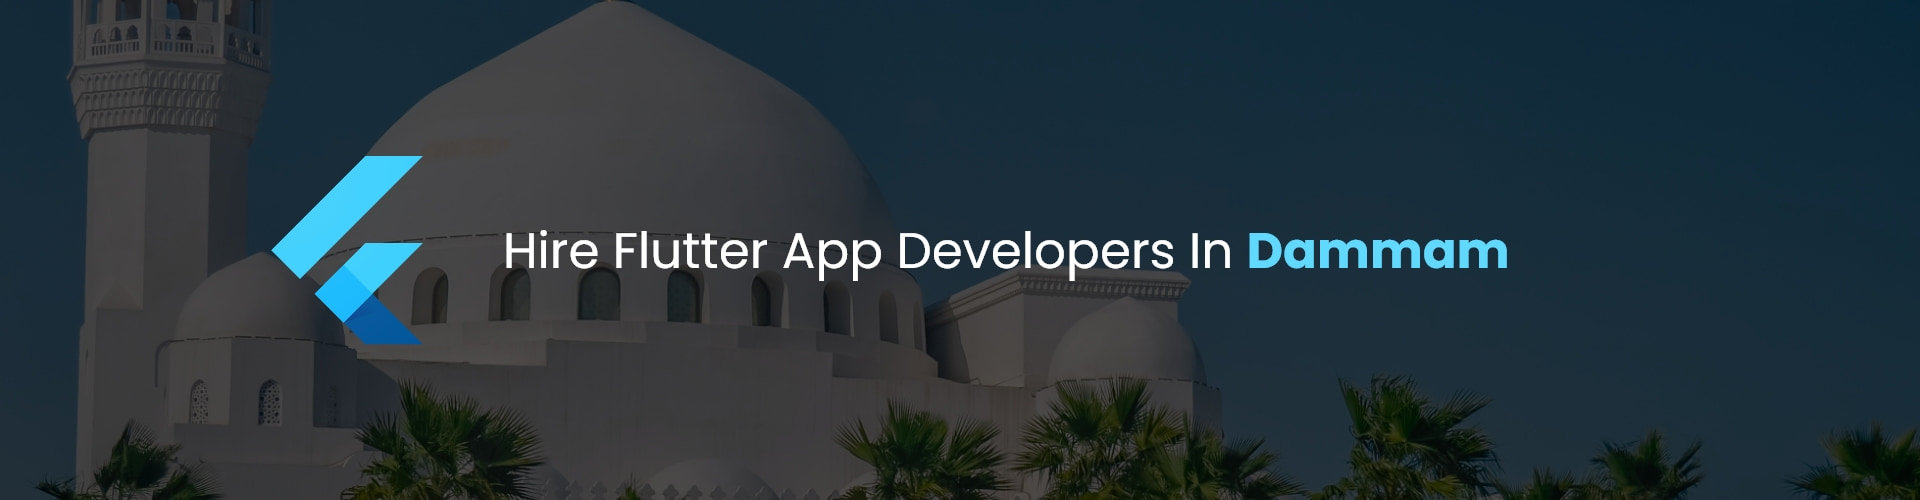 hire flutter app developers in dammam